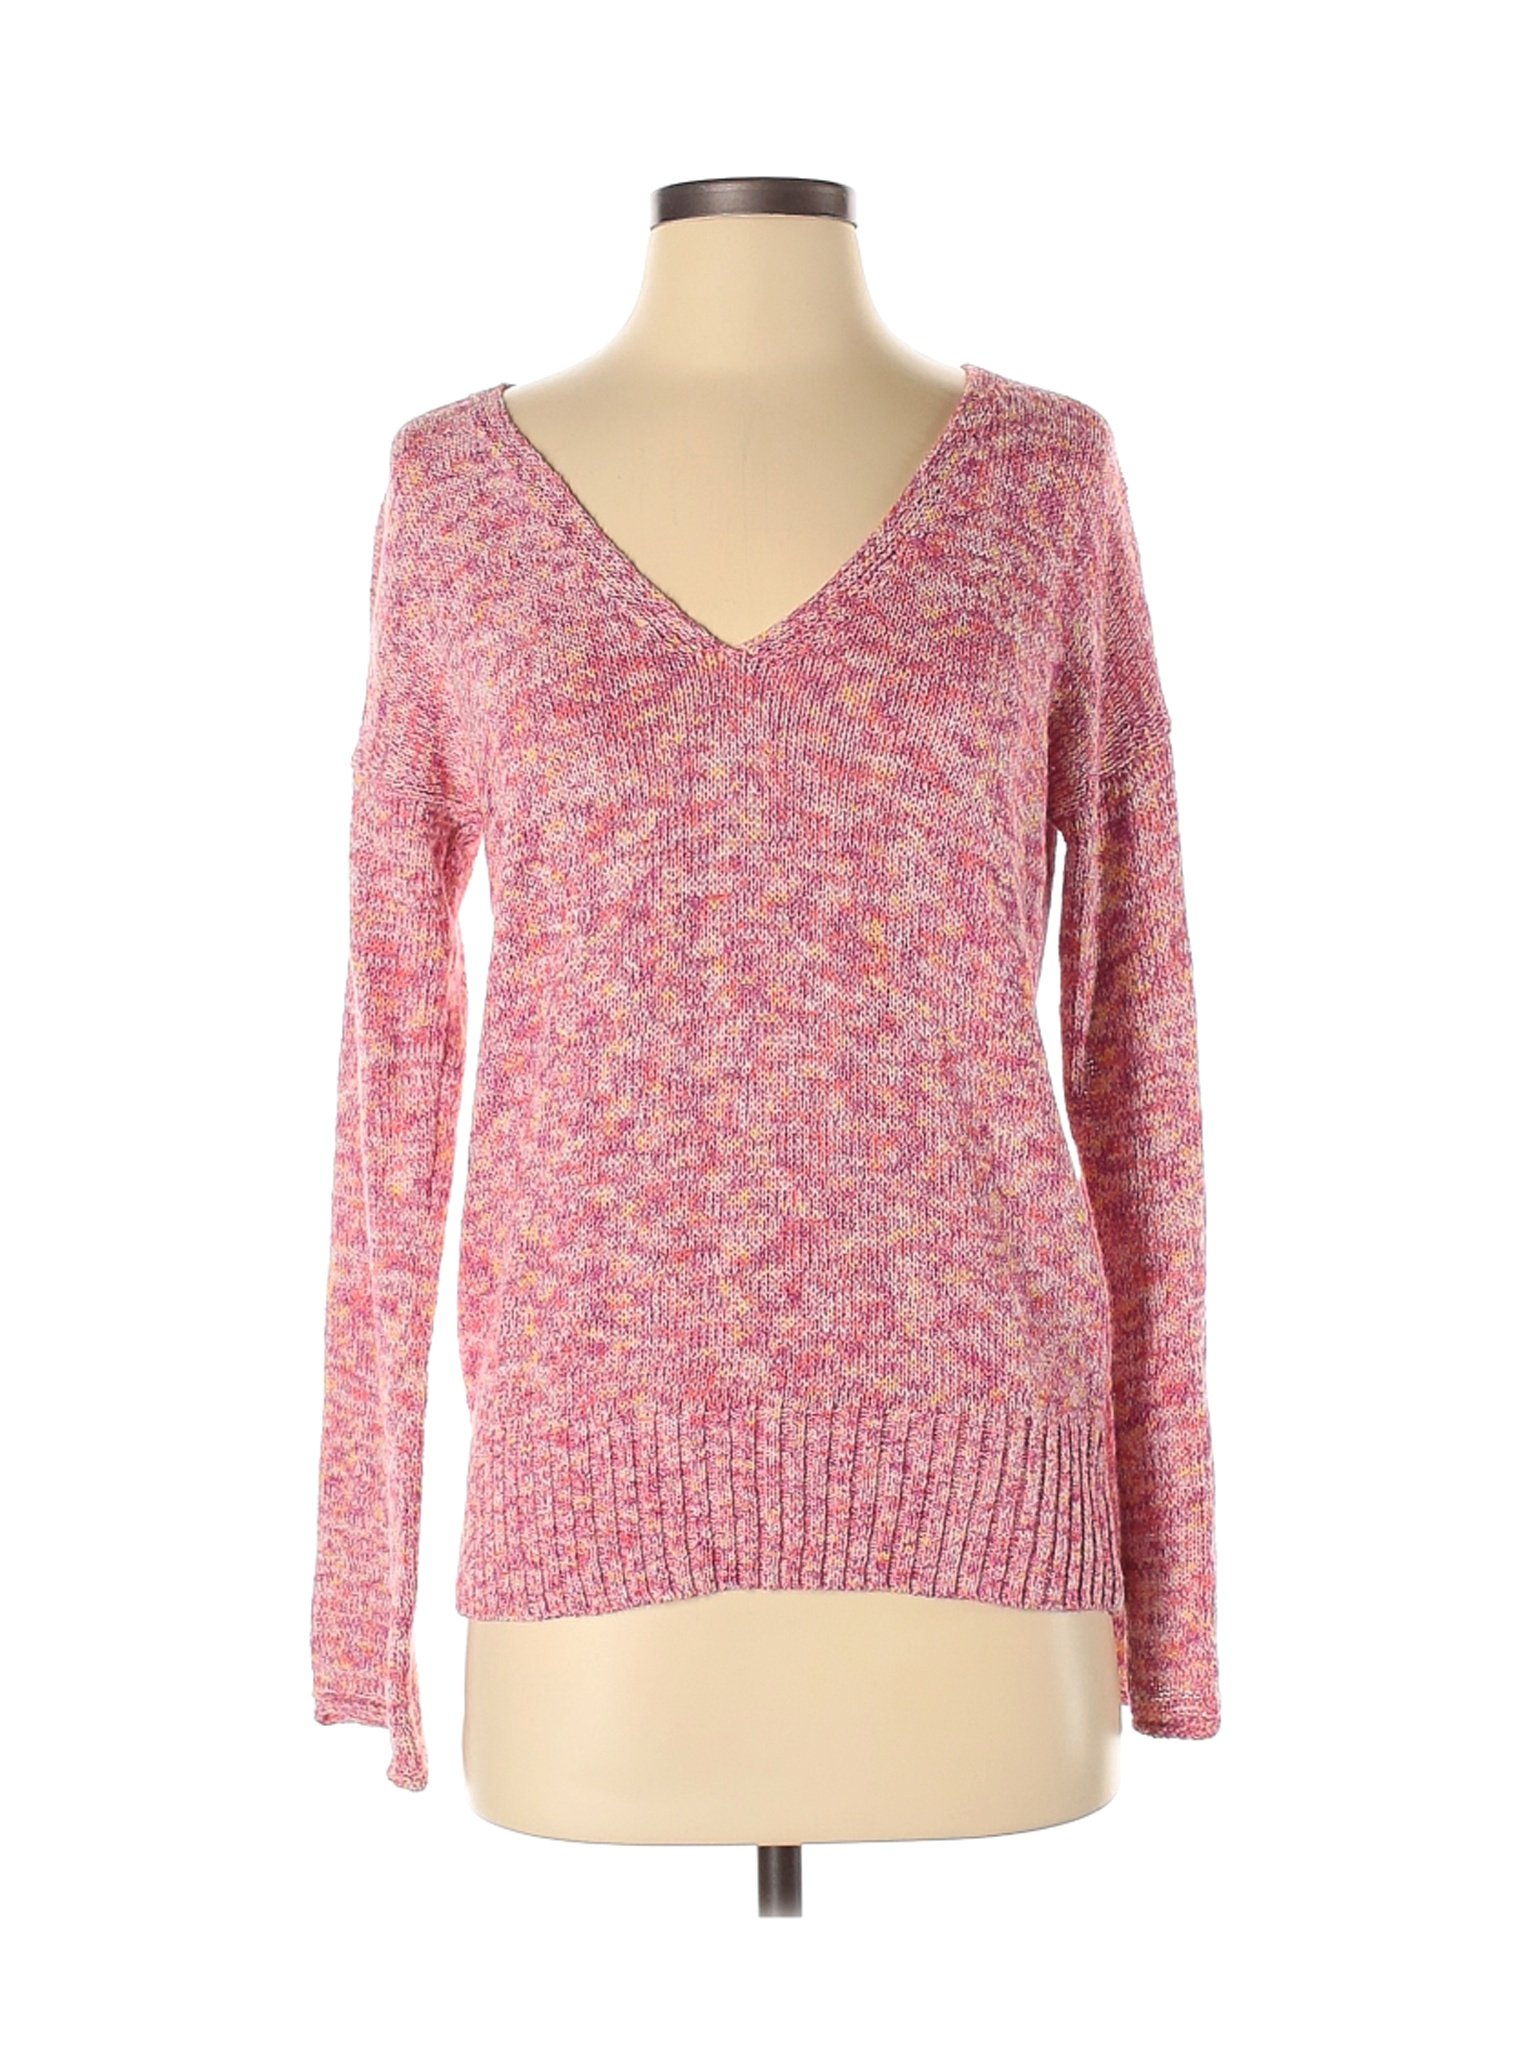 J.Crew Women Pink Pullover Sweater S | eBay